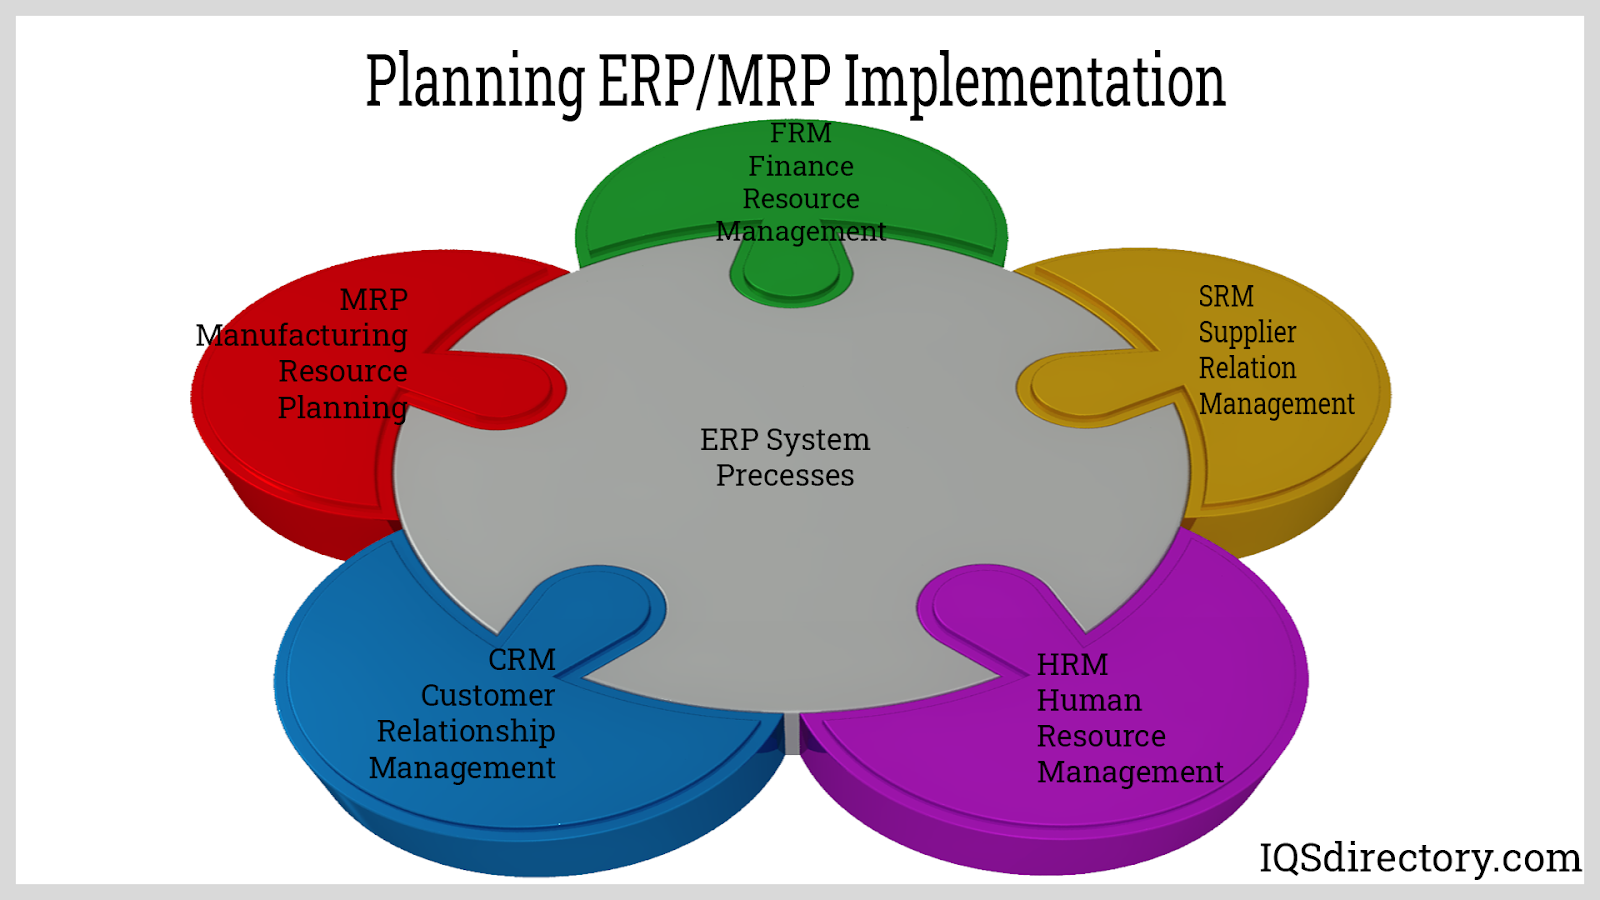 Planning ERP/MRP Implementation